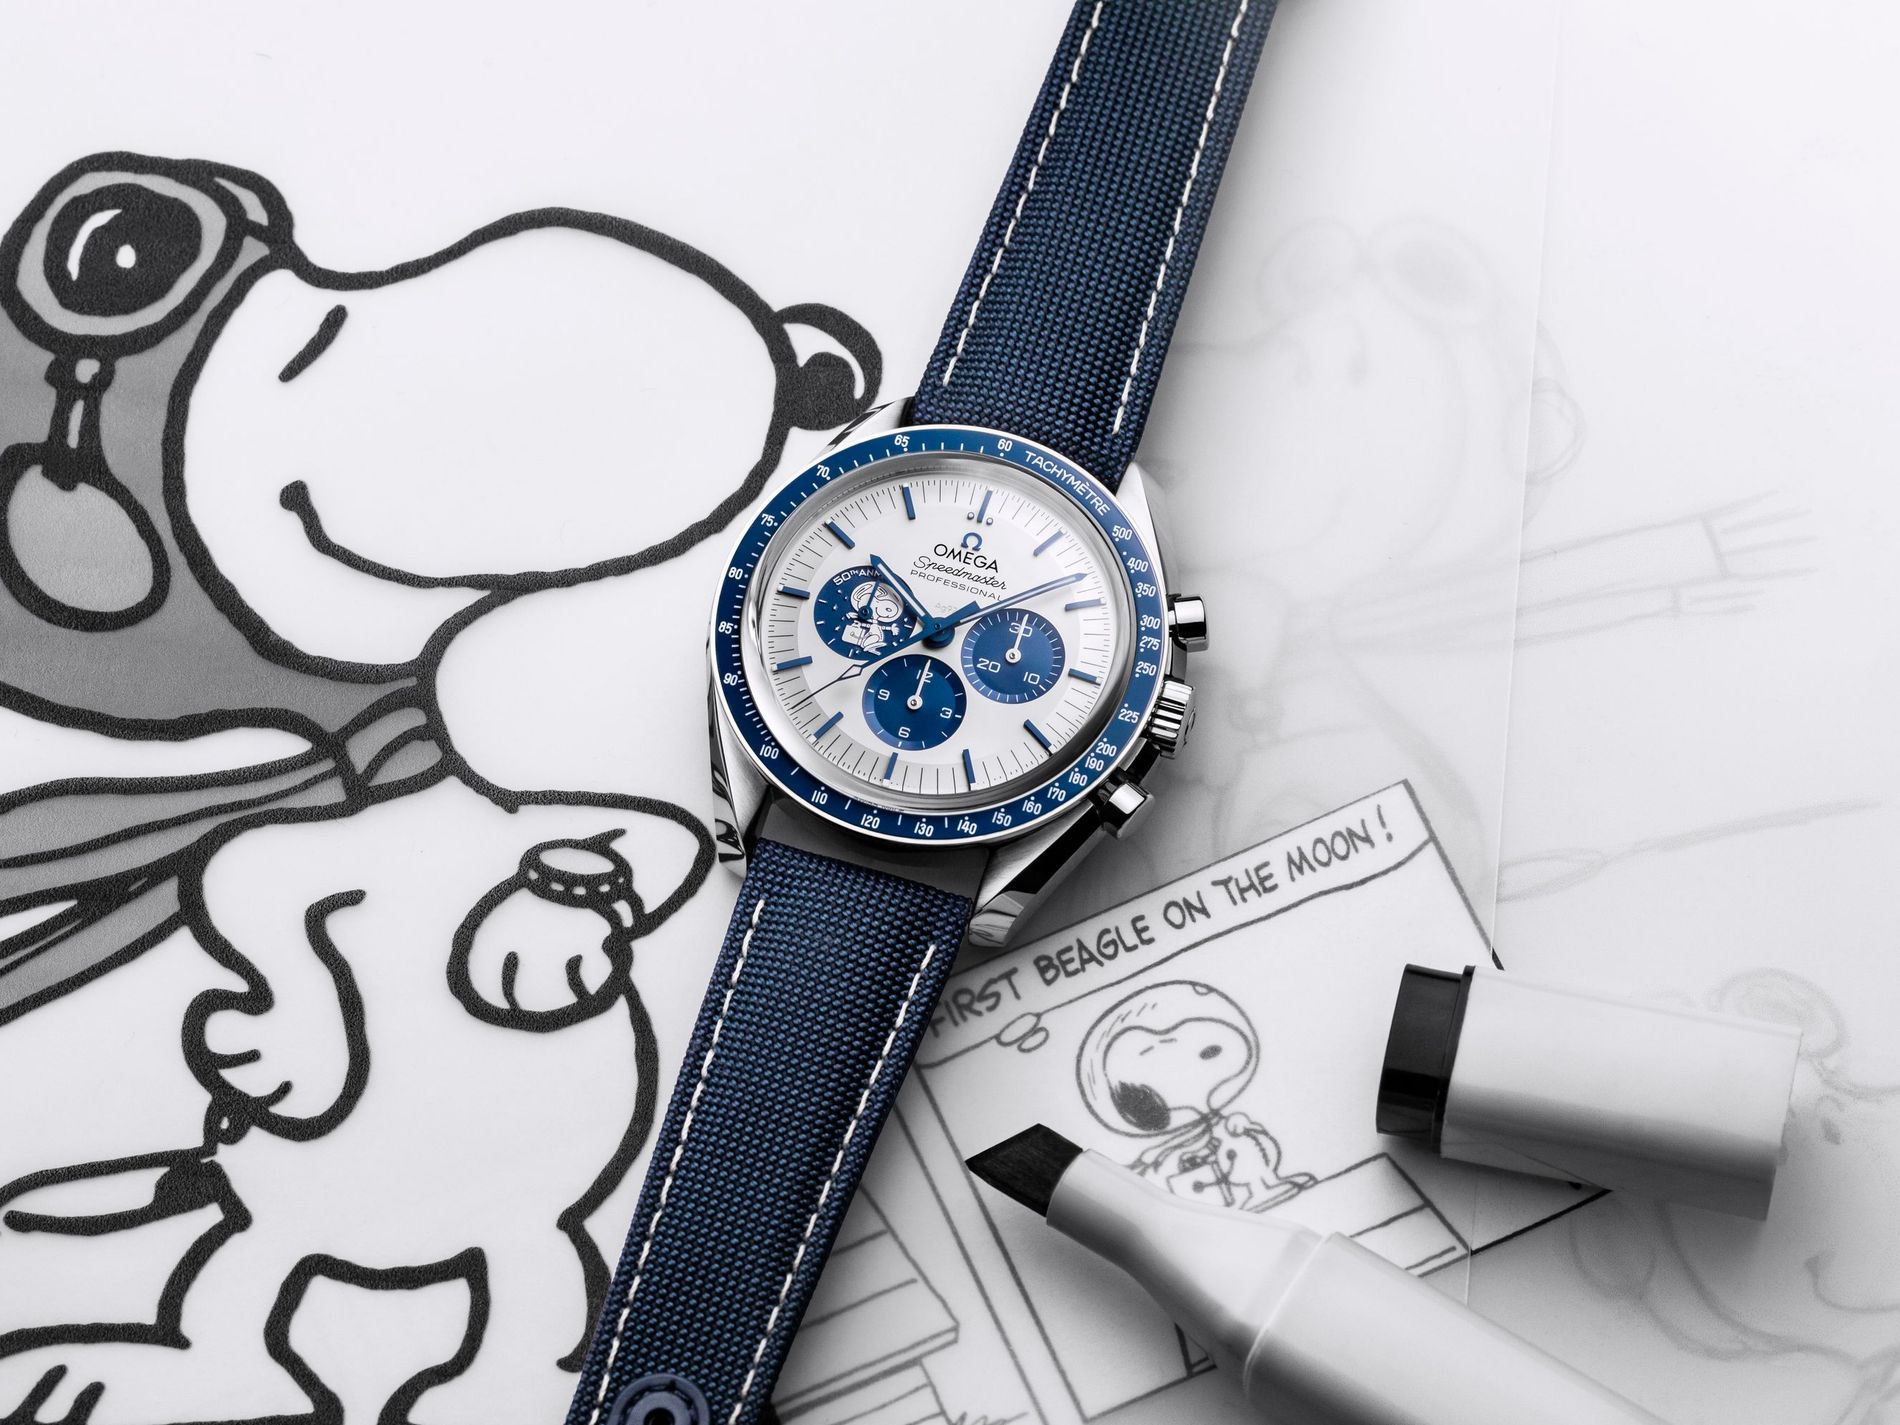 Omega Apollo 13 Snoopy watch